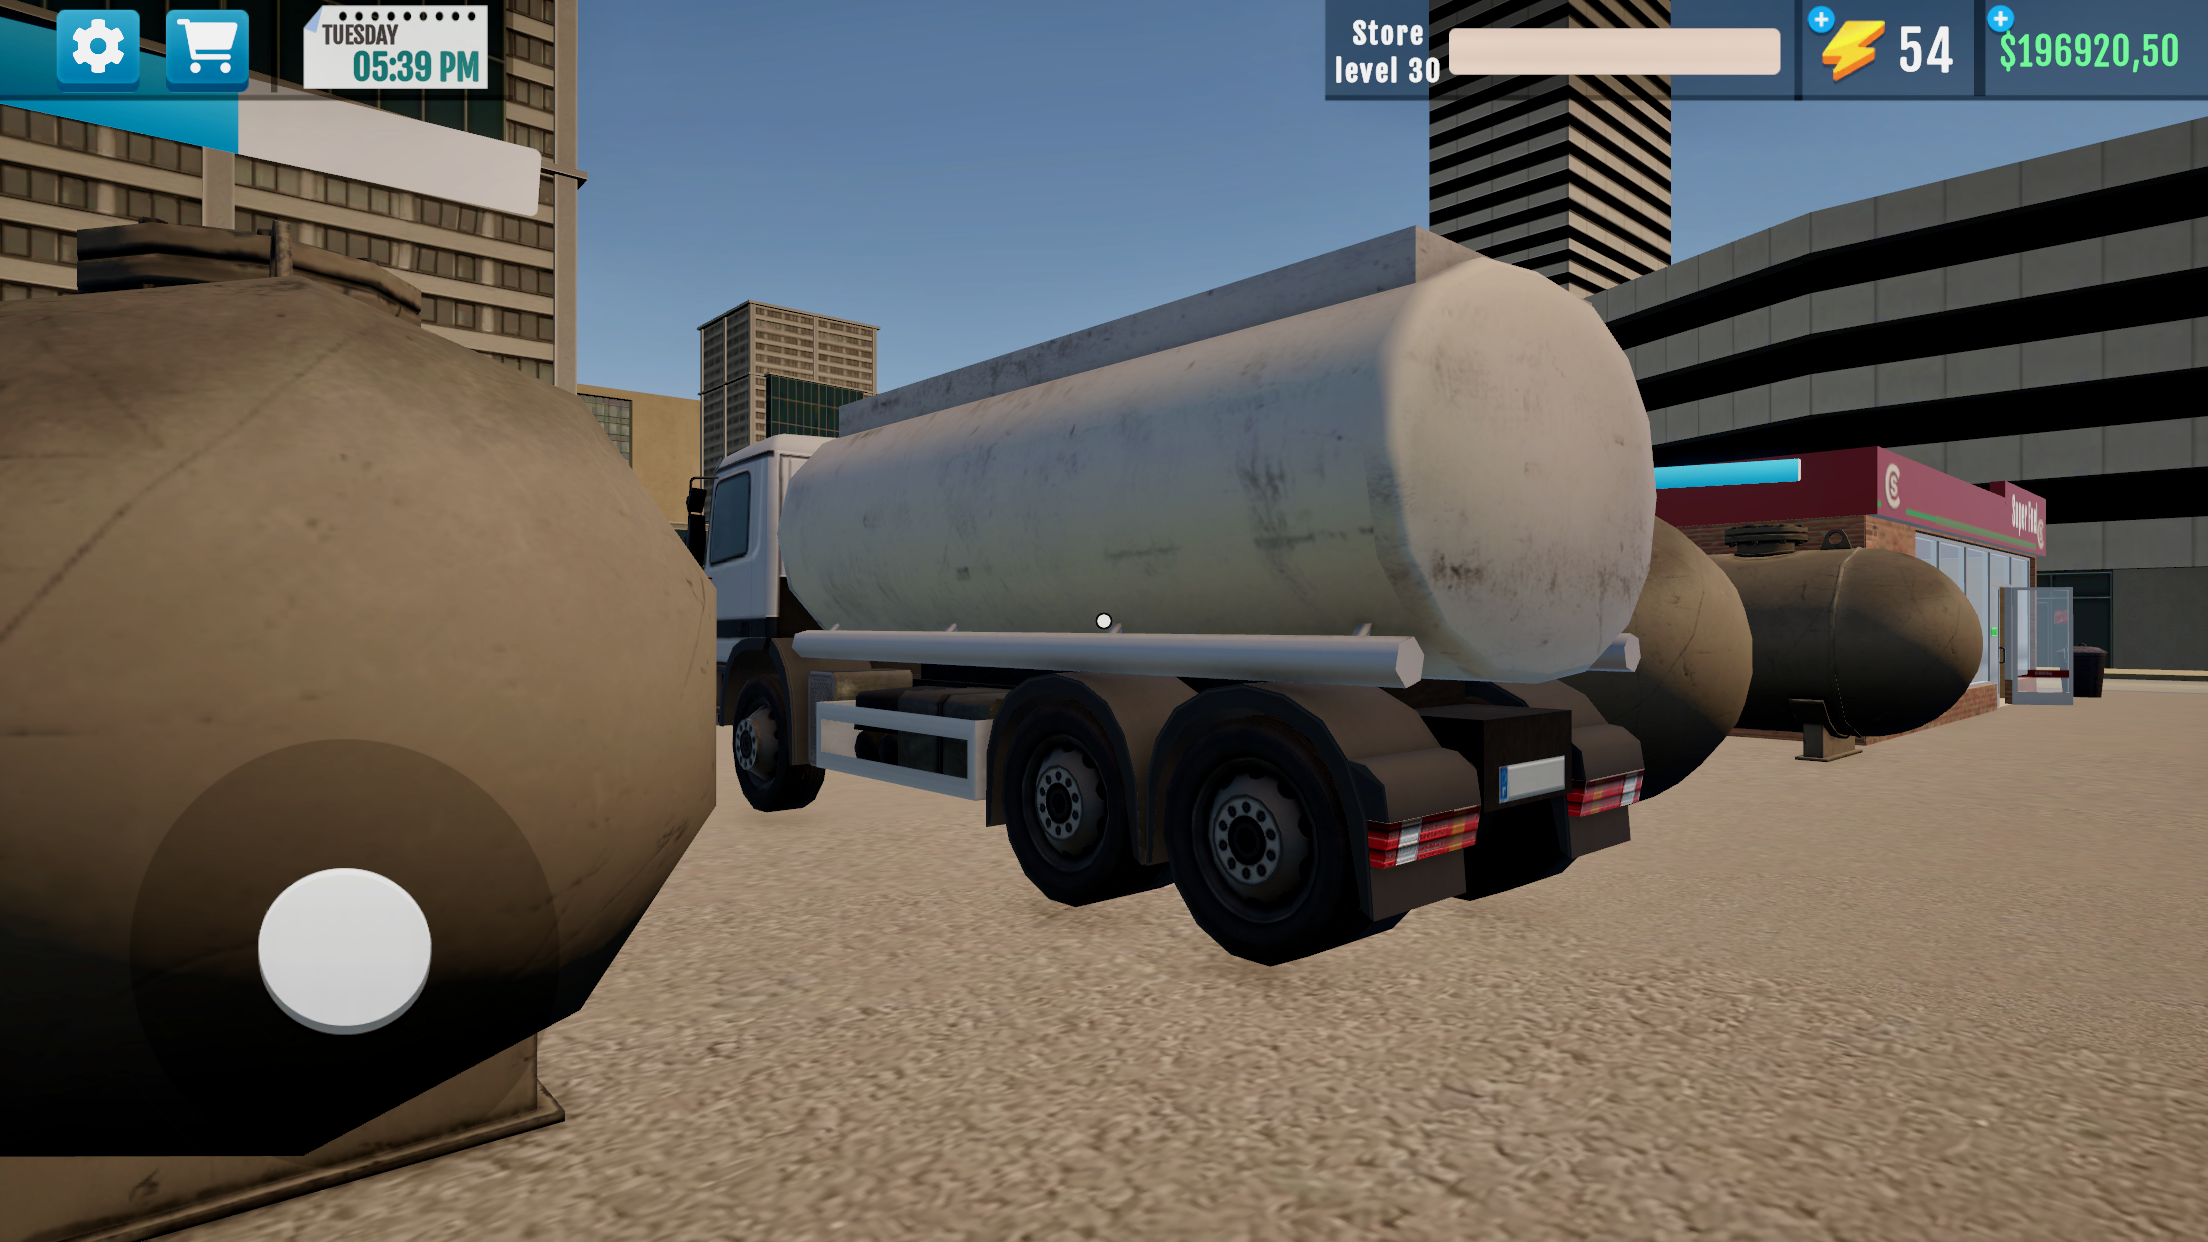 City Gas Station Simulator 3D遊戲截圖